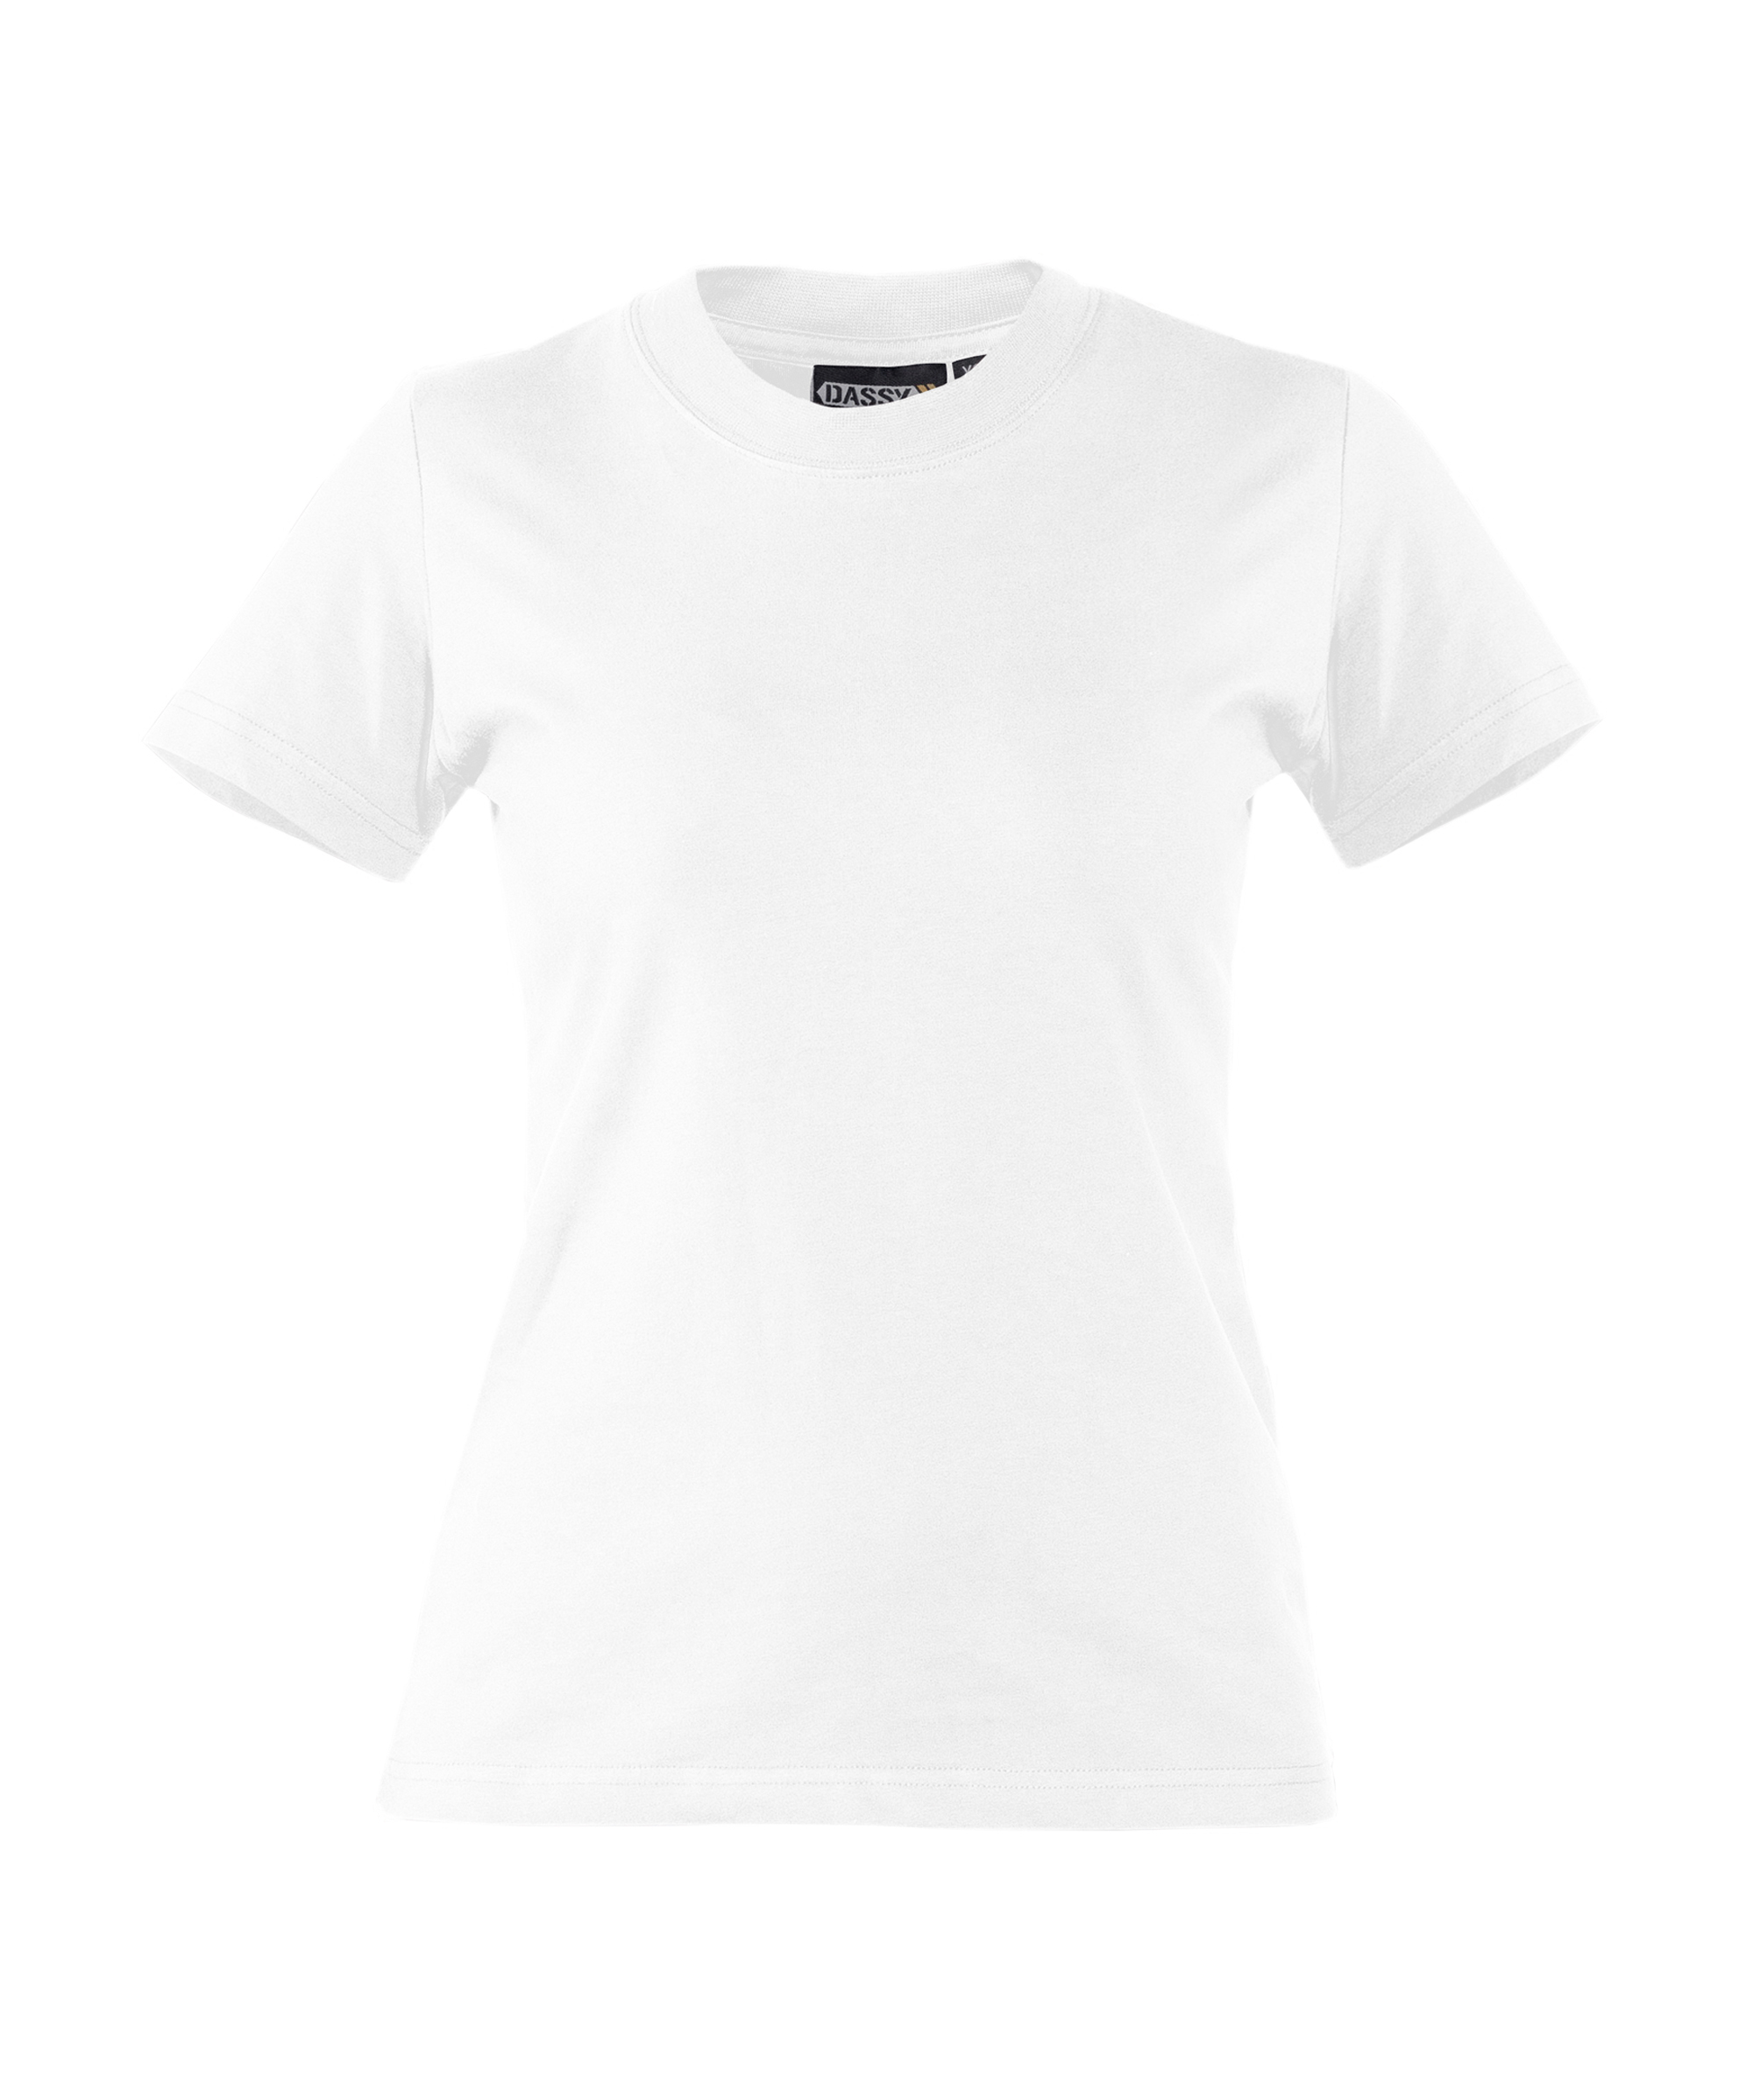 oscar-women_t-shirt_white_front.jpg